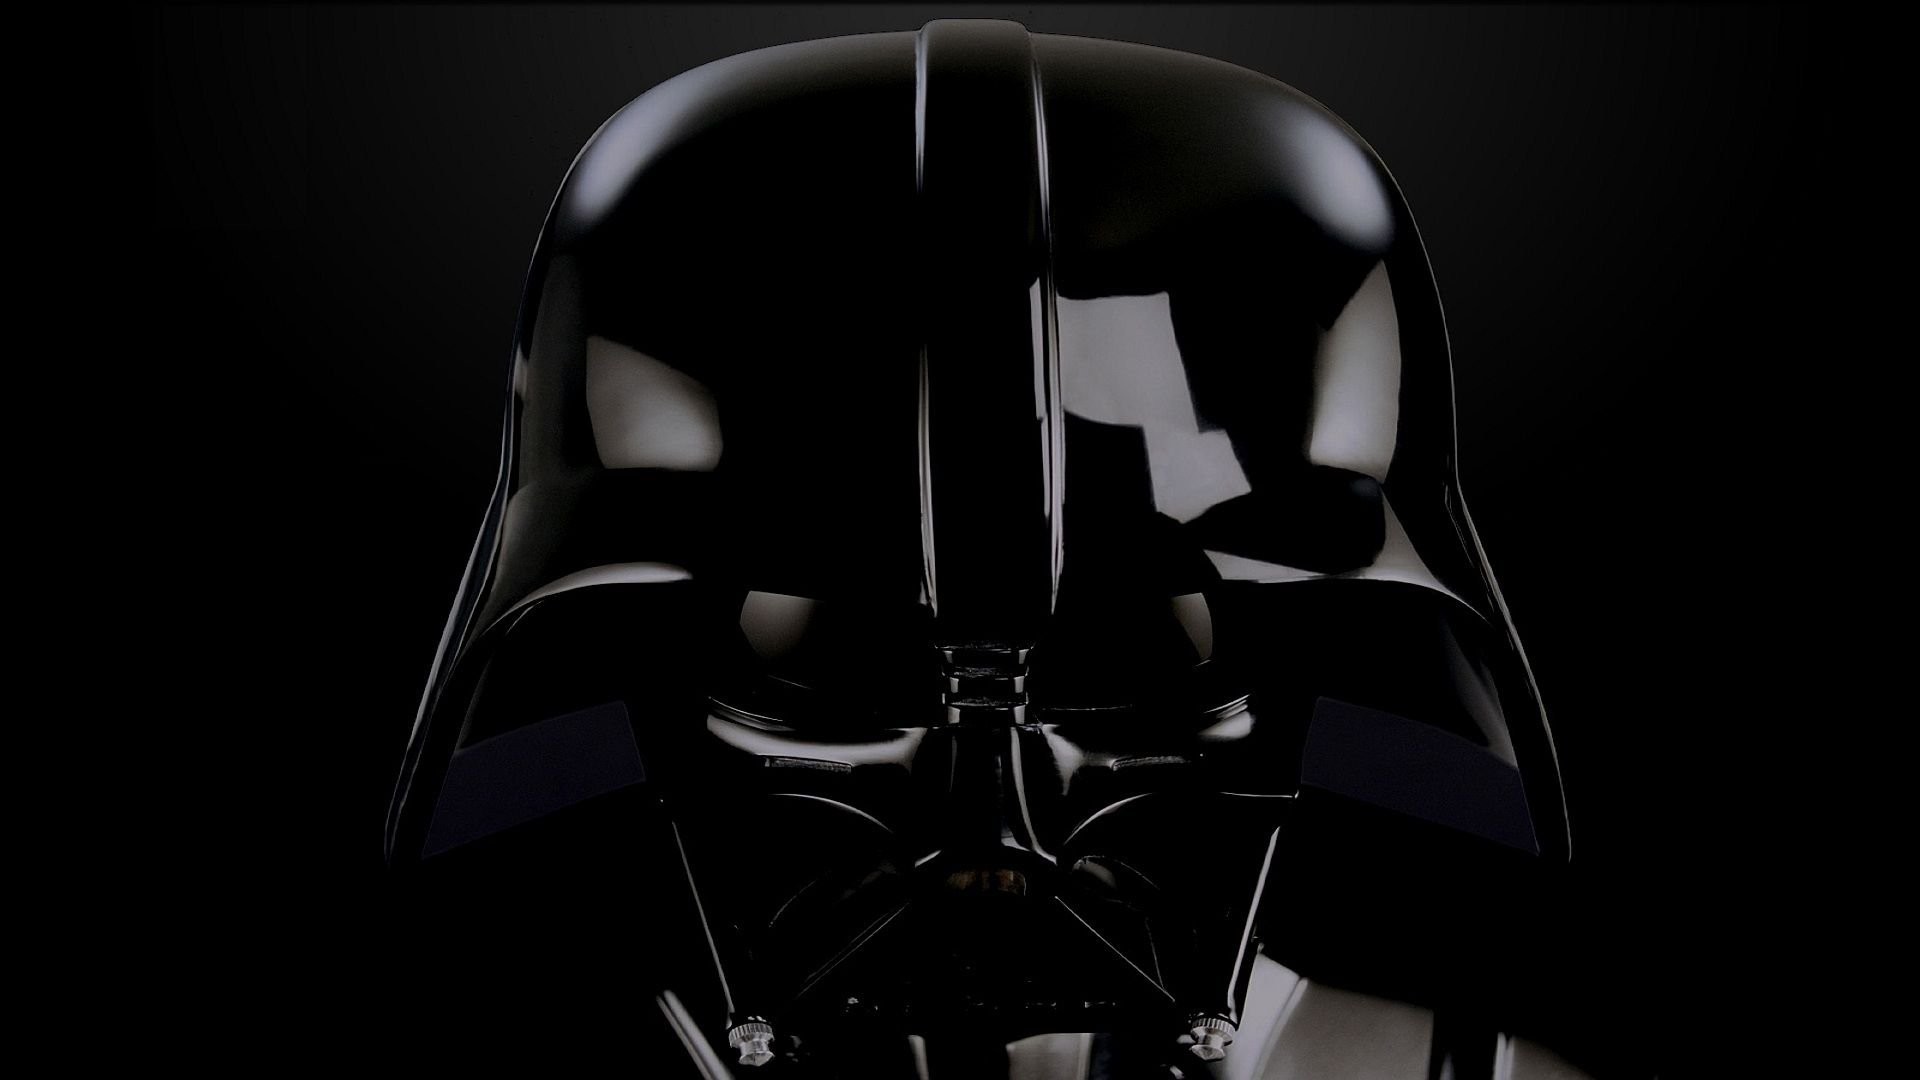 1920x1080 2560x1440 Darth Vader Star Wars Mask Helmet Wallpapers